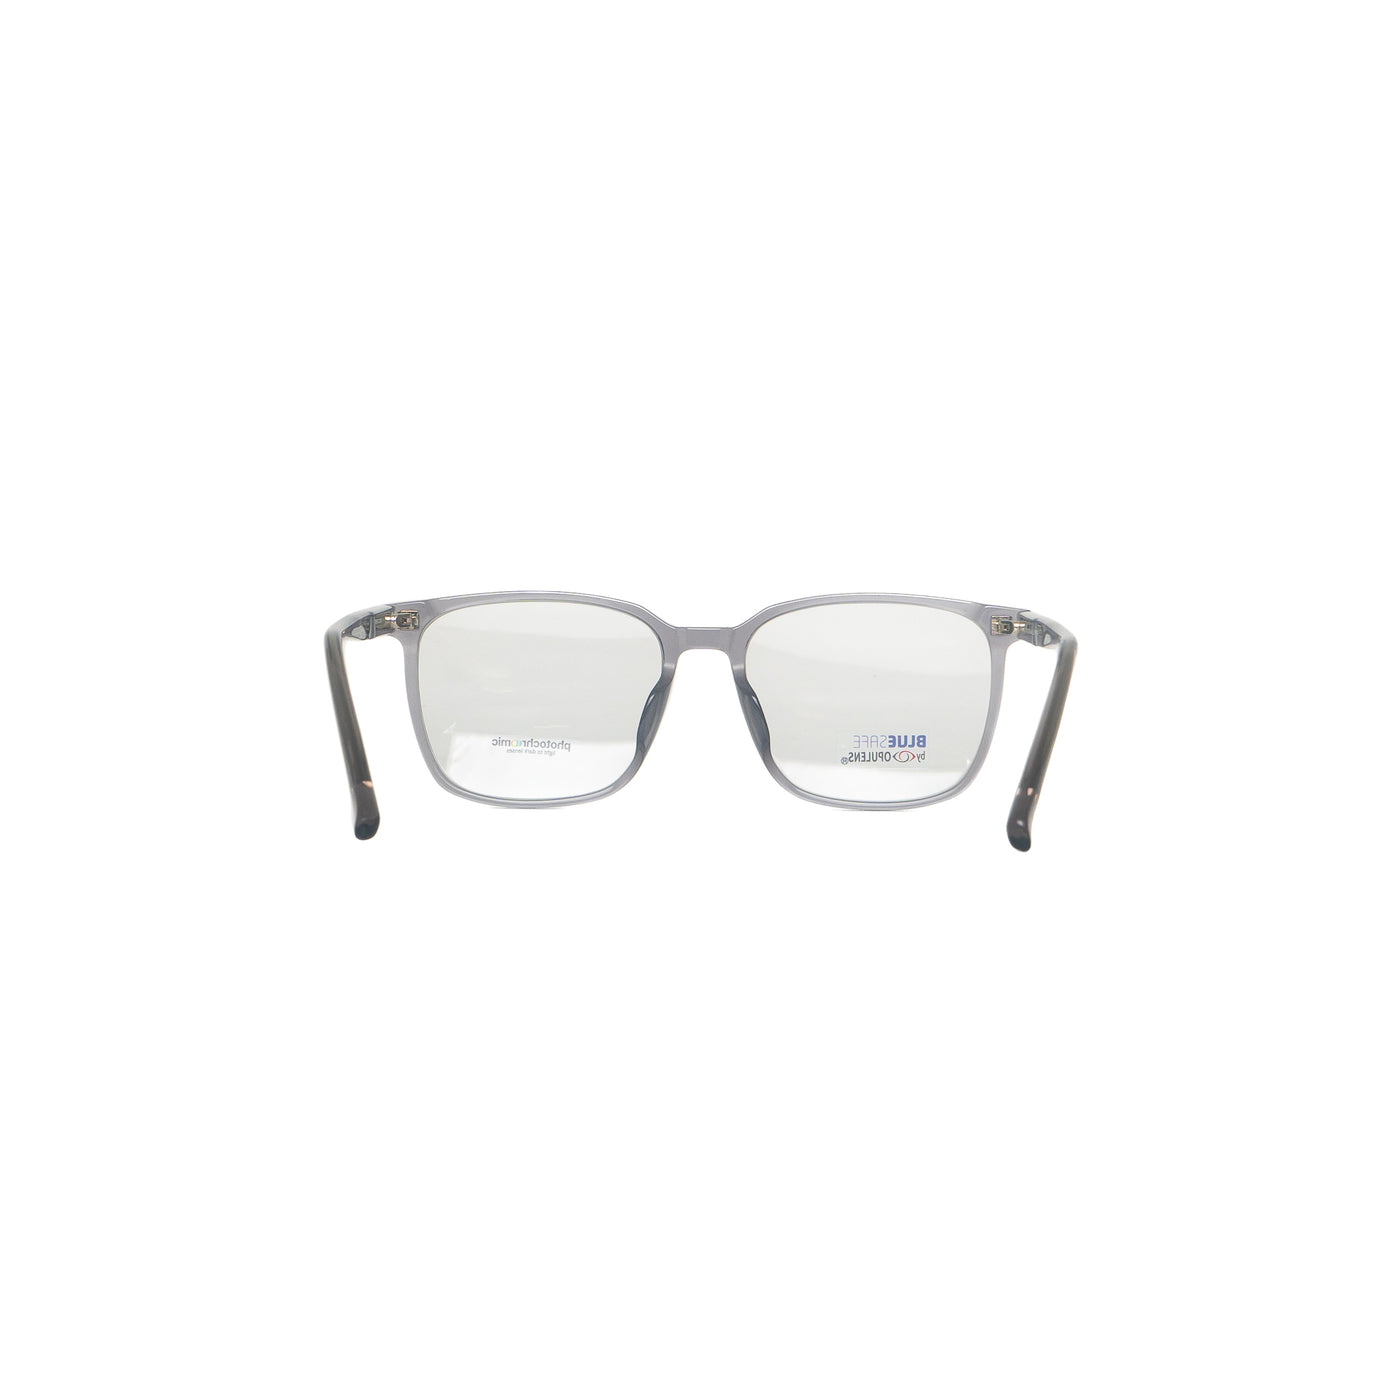 Tony Morgan TM8013C352BLK | Eyeglasses - Vision Express Optical Philippines